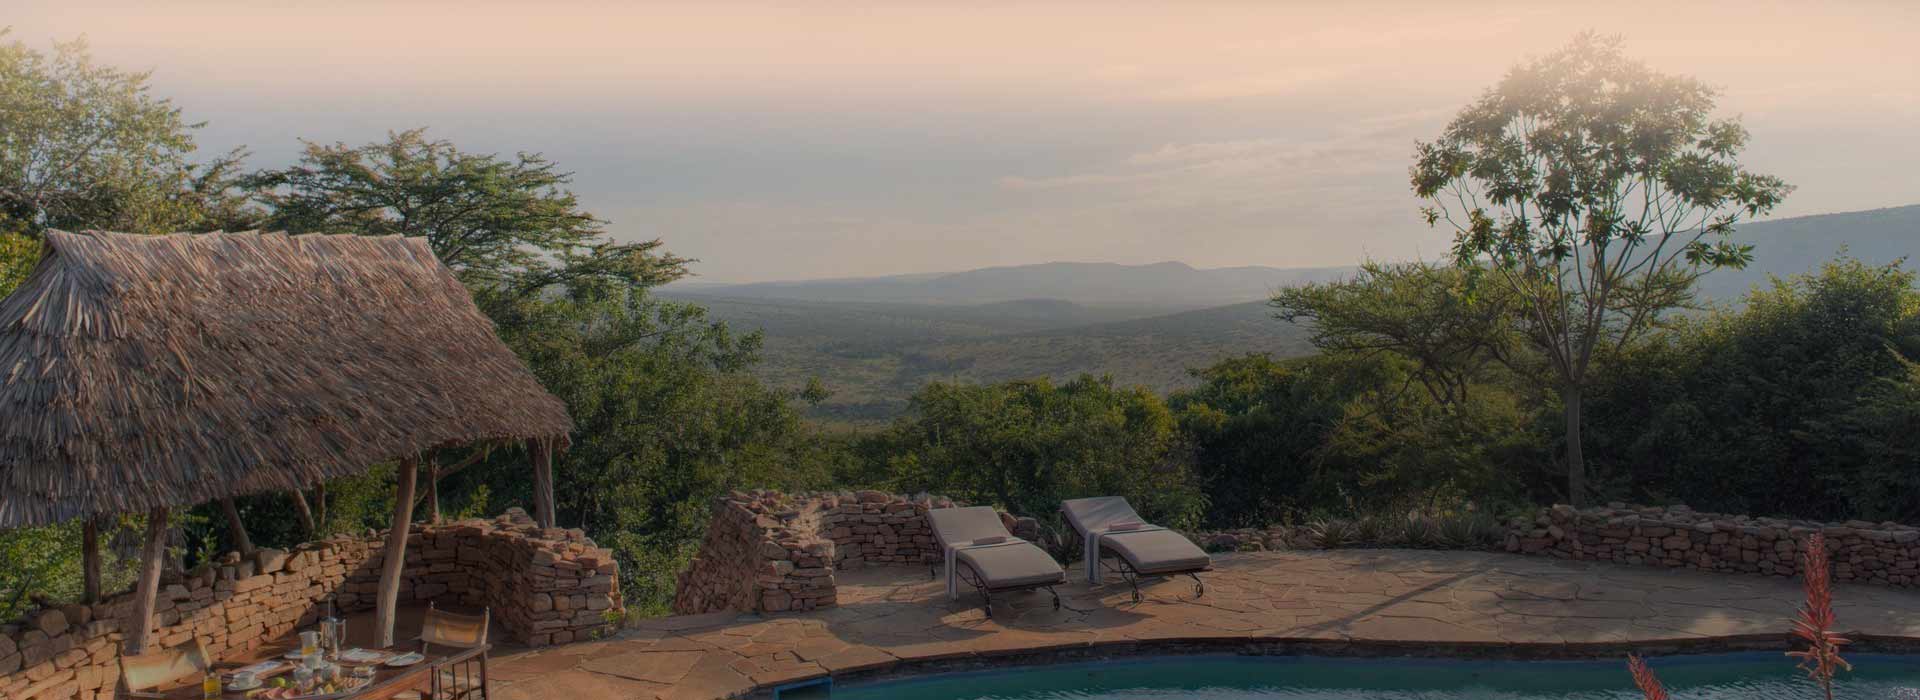 4 Days Tanzania Lodge Safari (Mwanza-Arusha) 